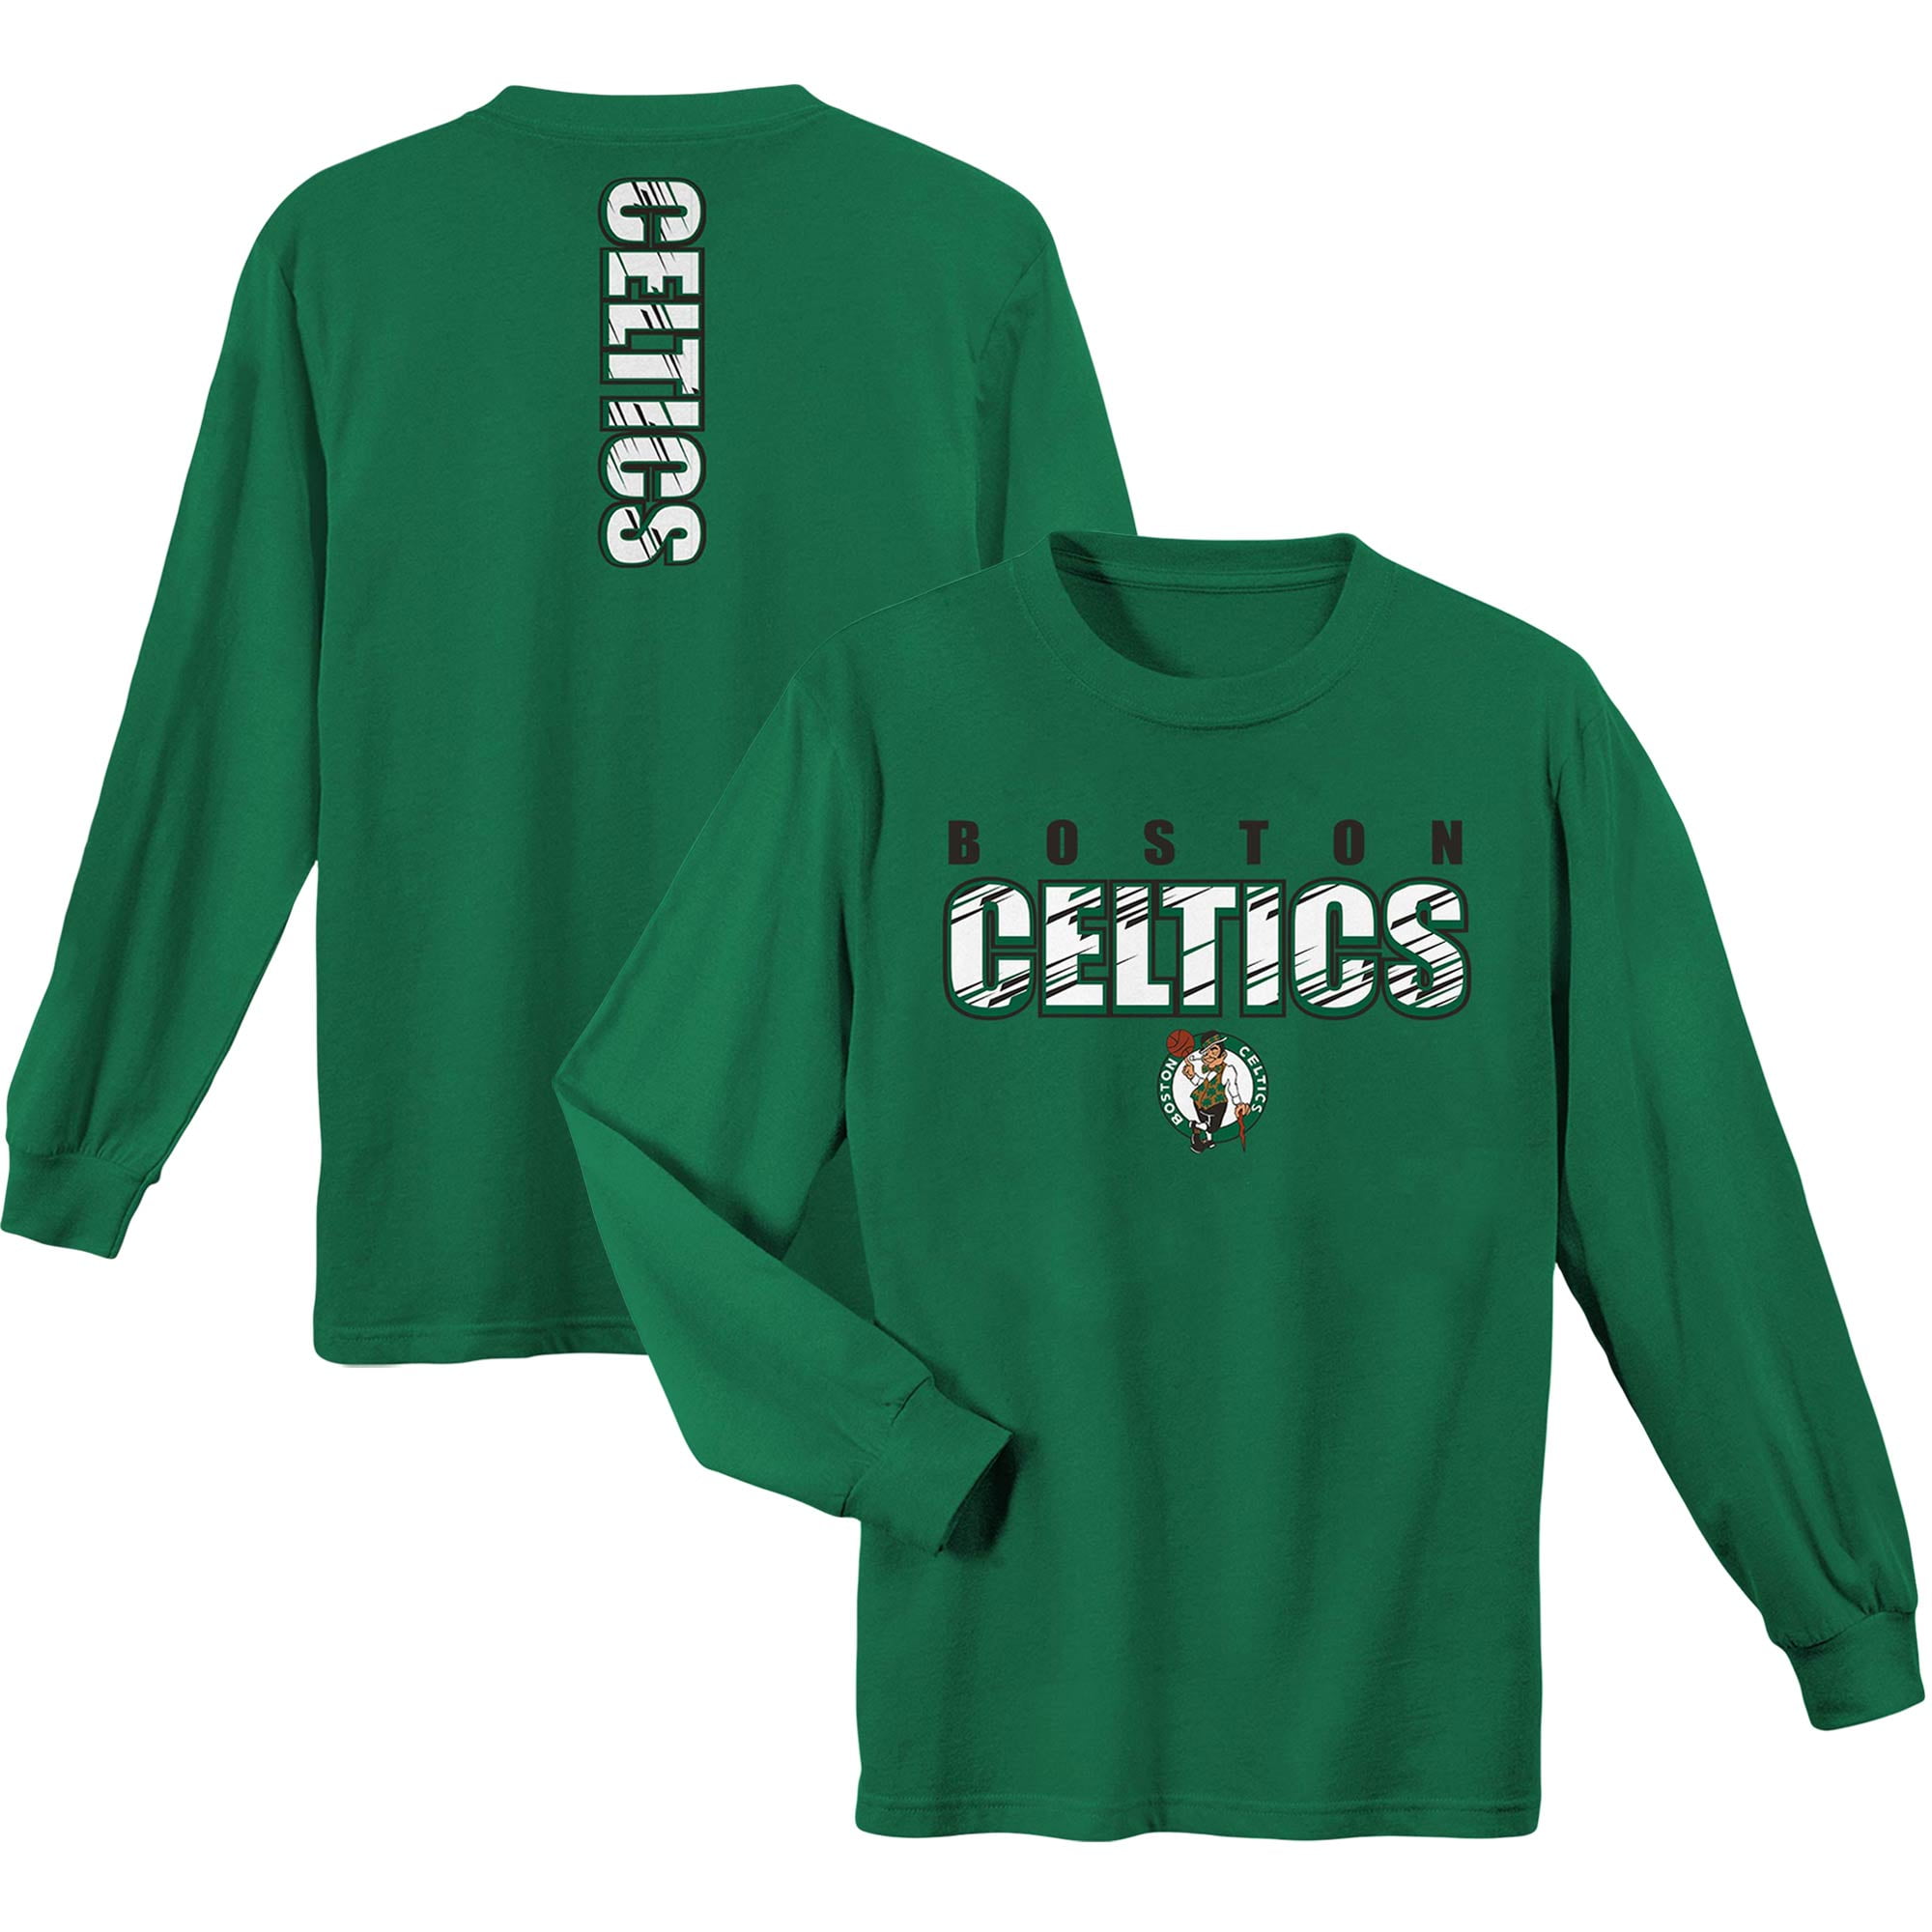 boston celtics youth apparel